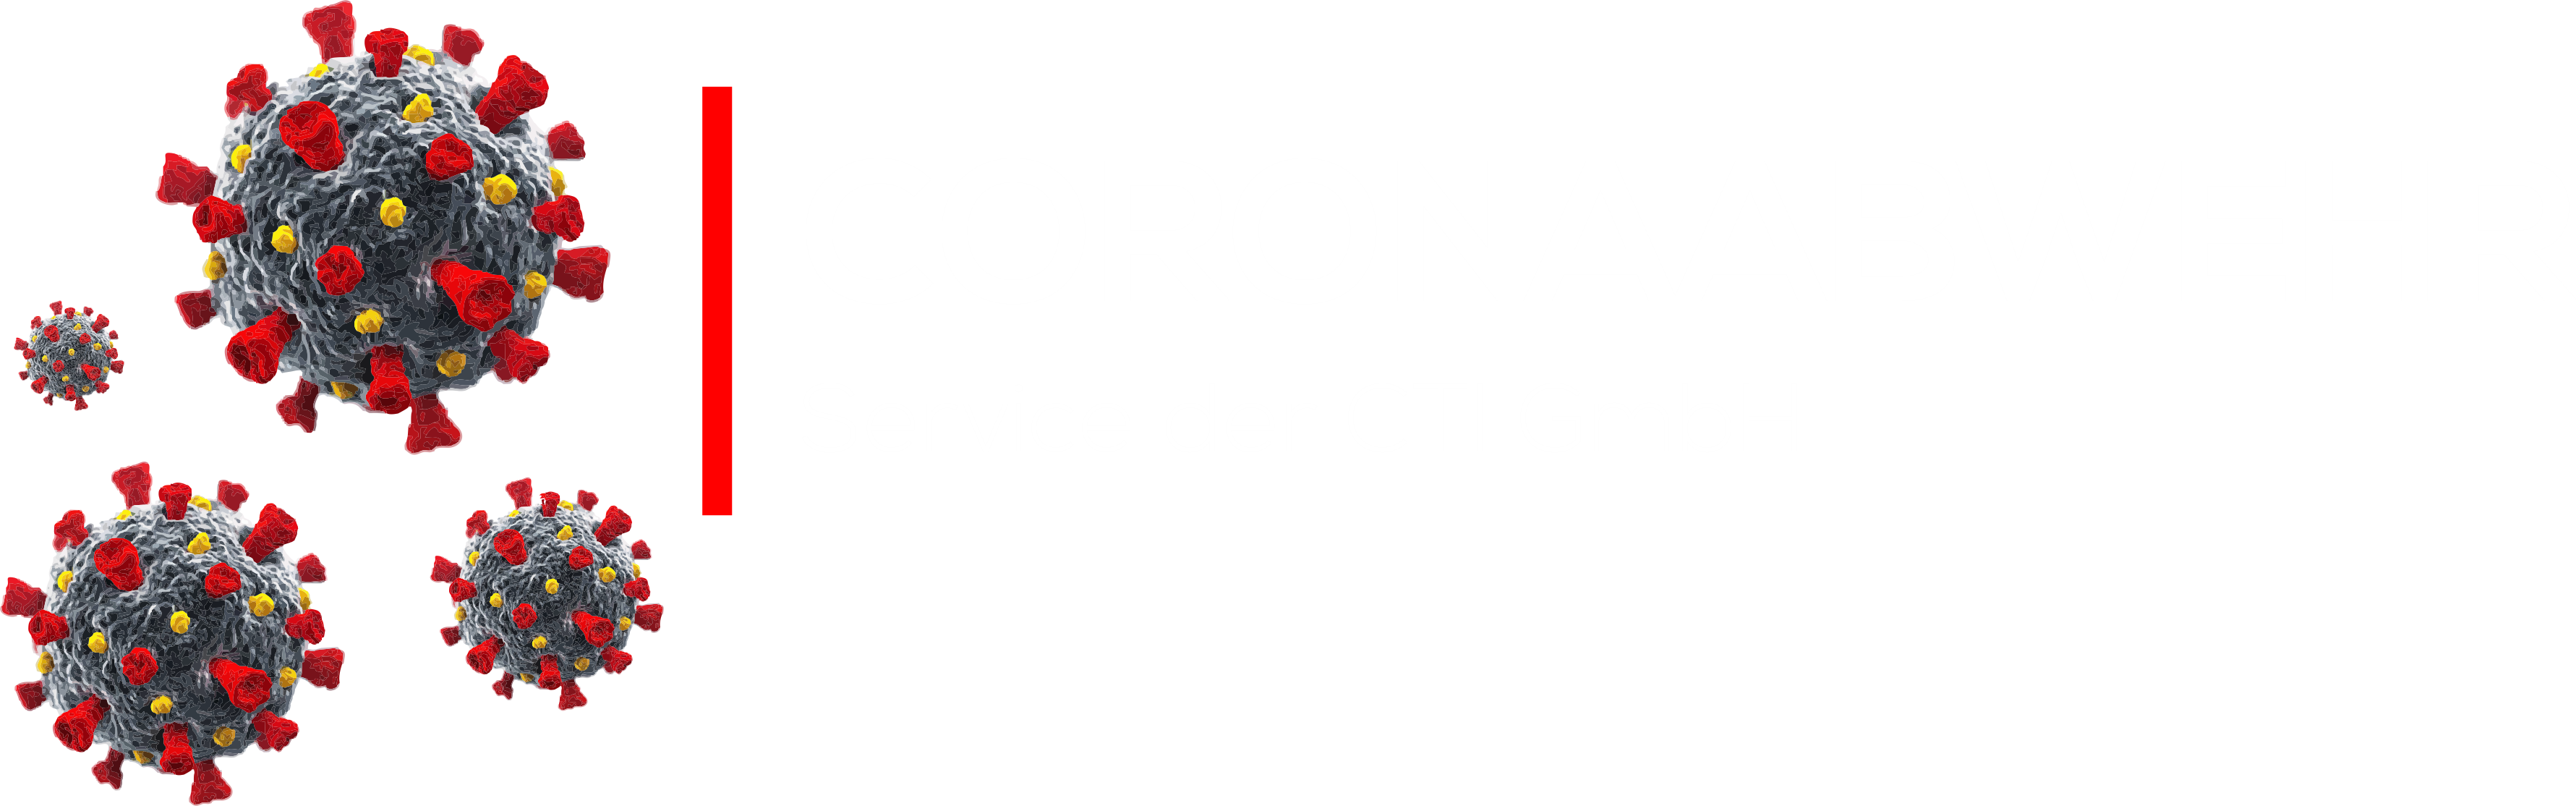 coronaabwehr.de